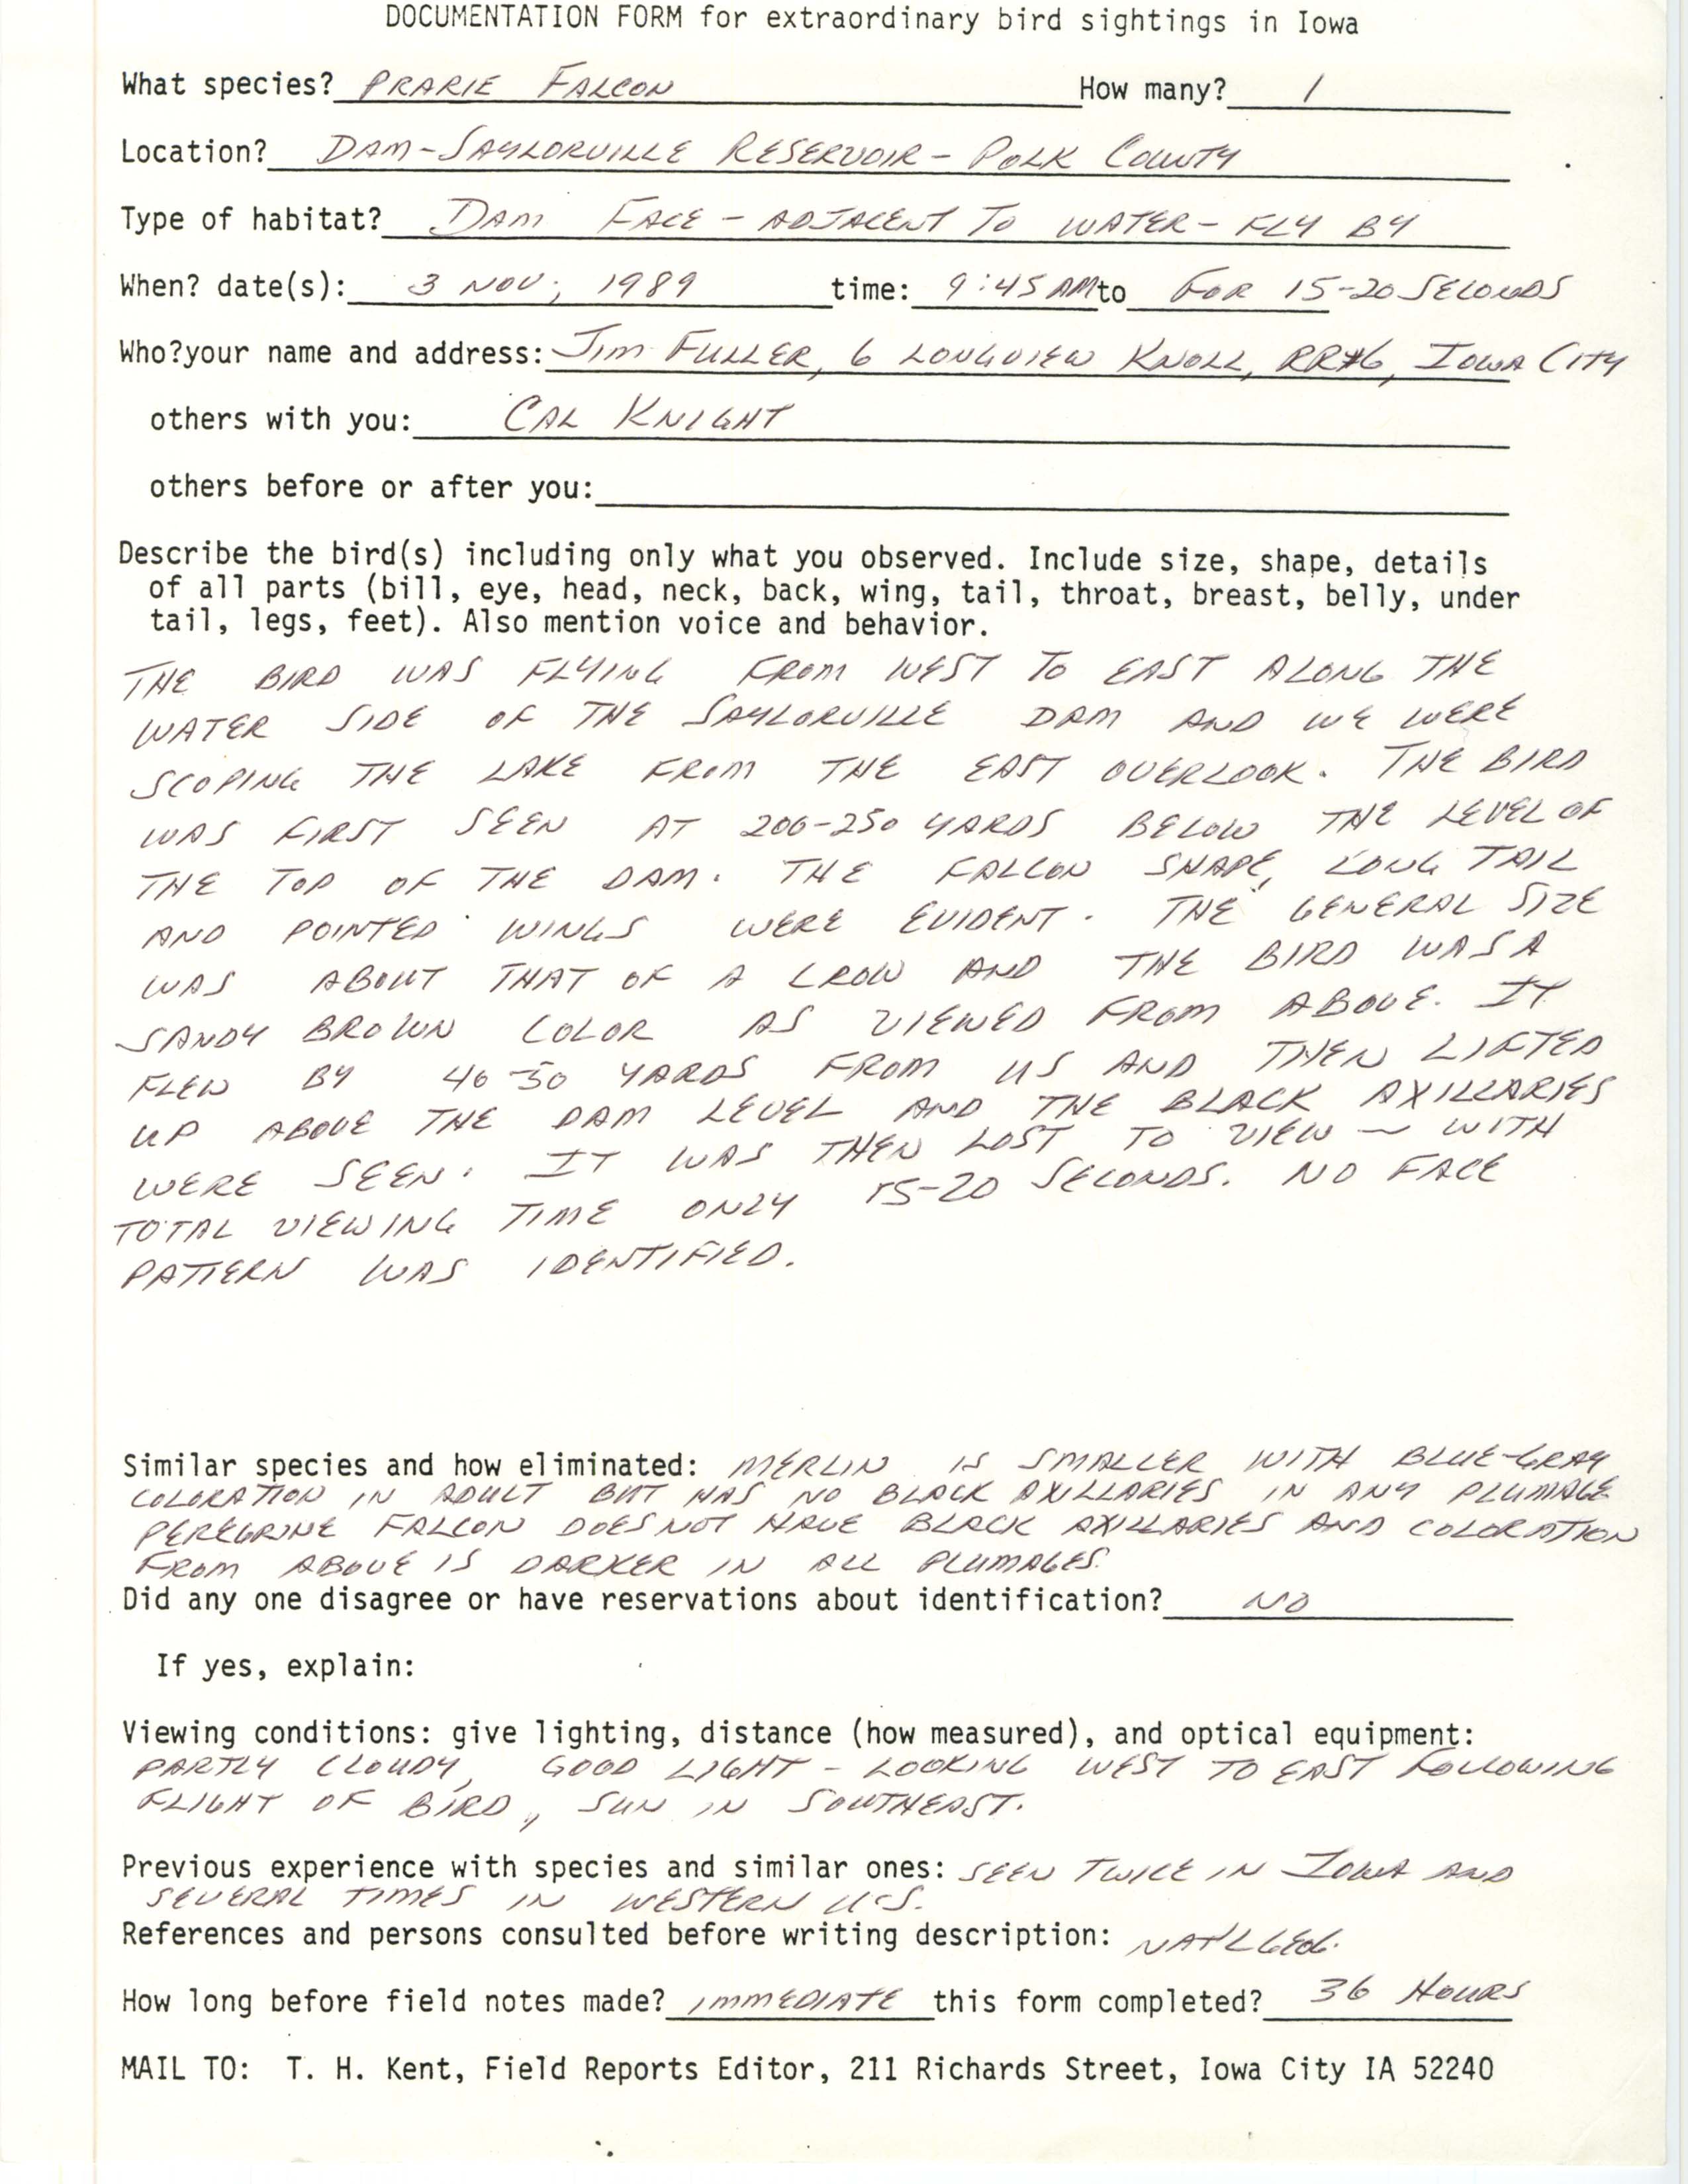 Rare bird documentation form for Prairie Falcon at Saylorville Dam, 1989